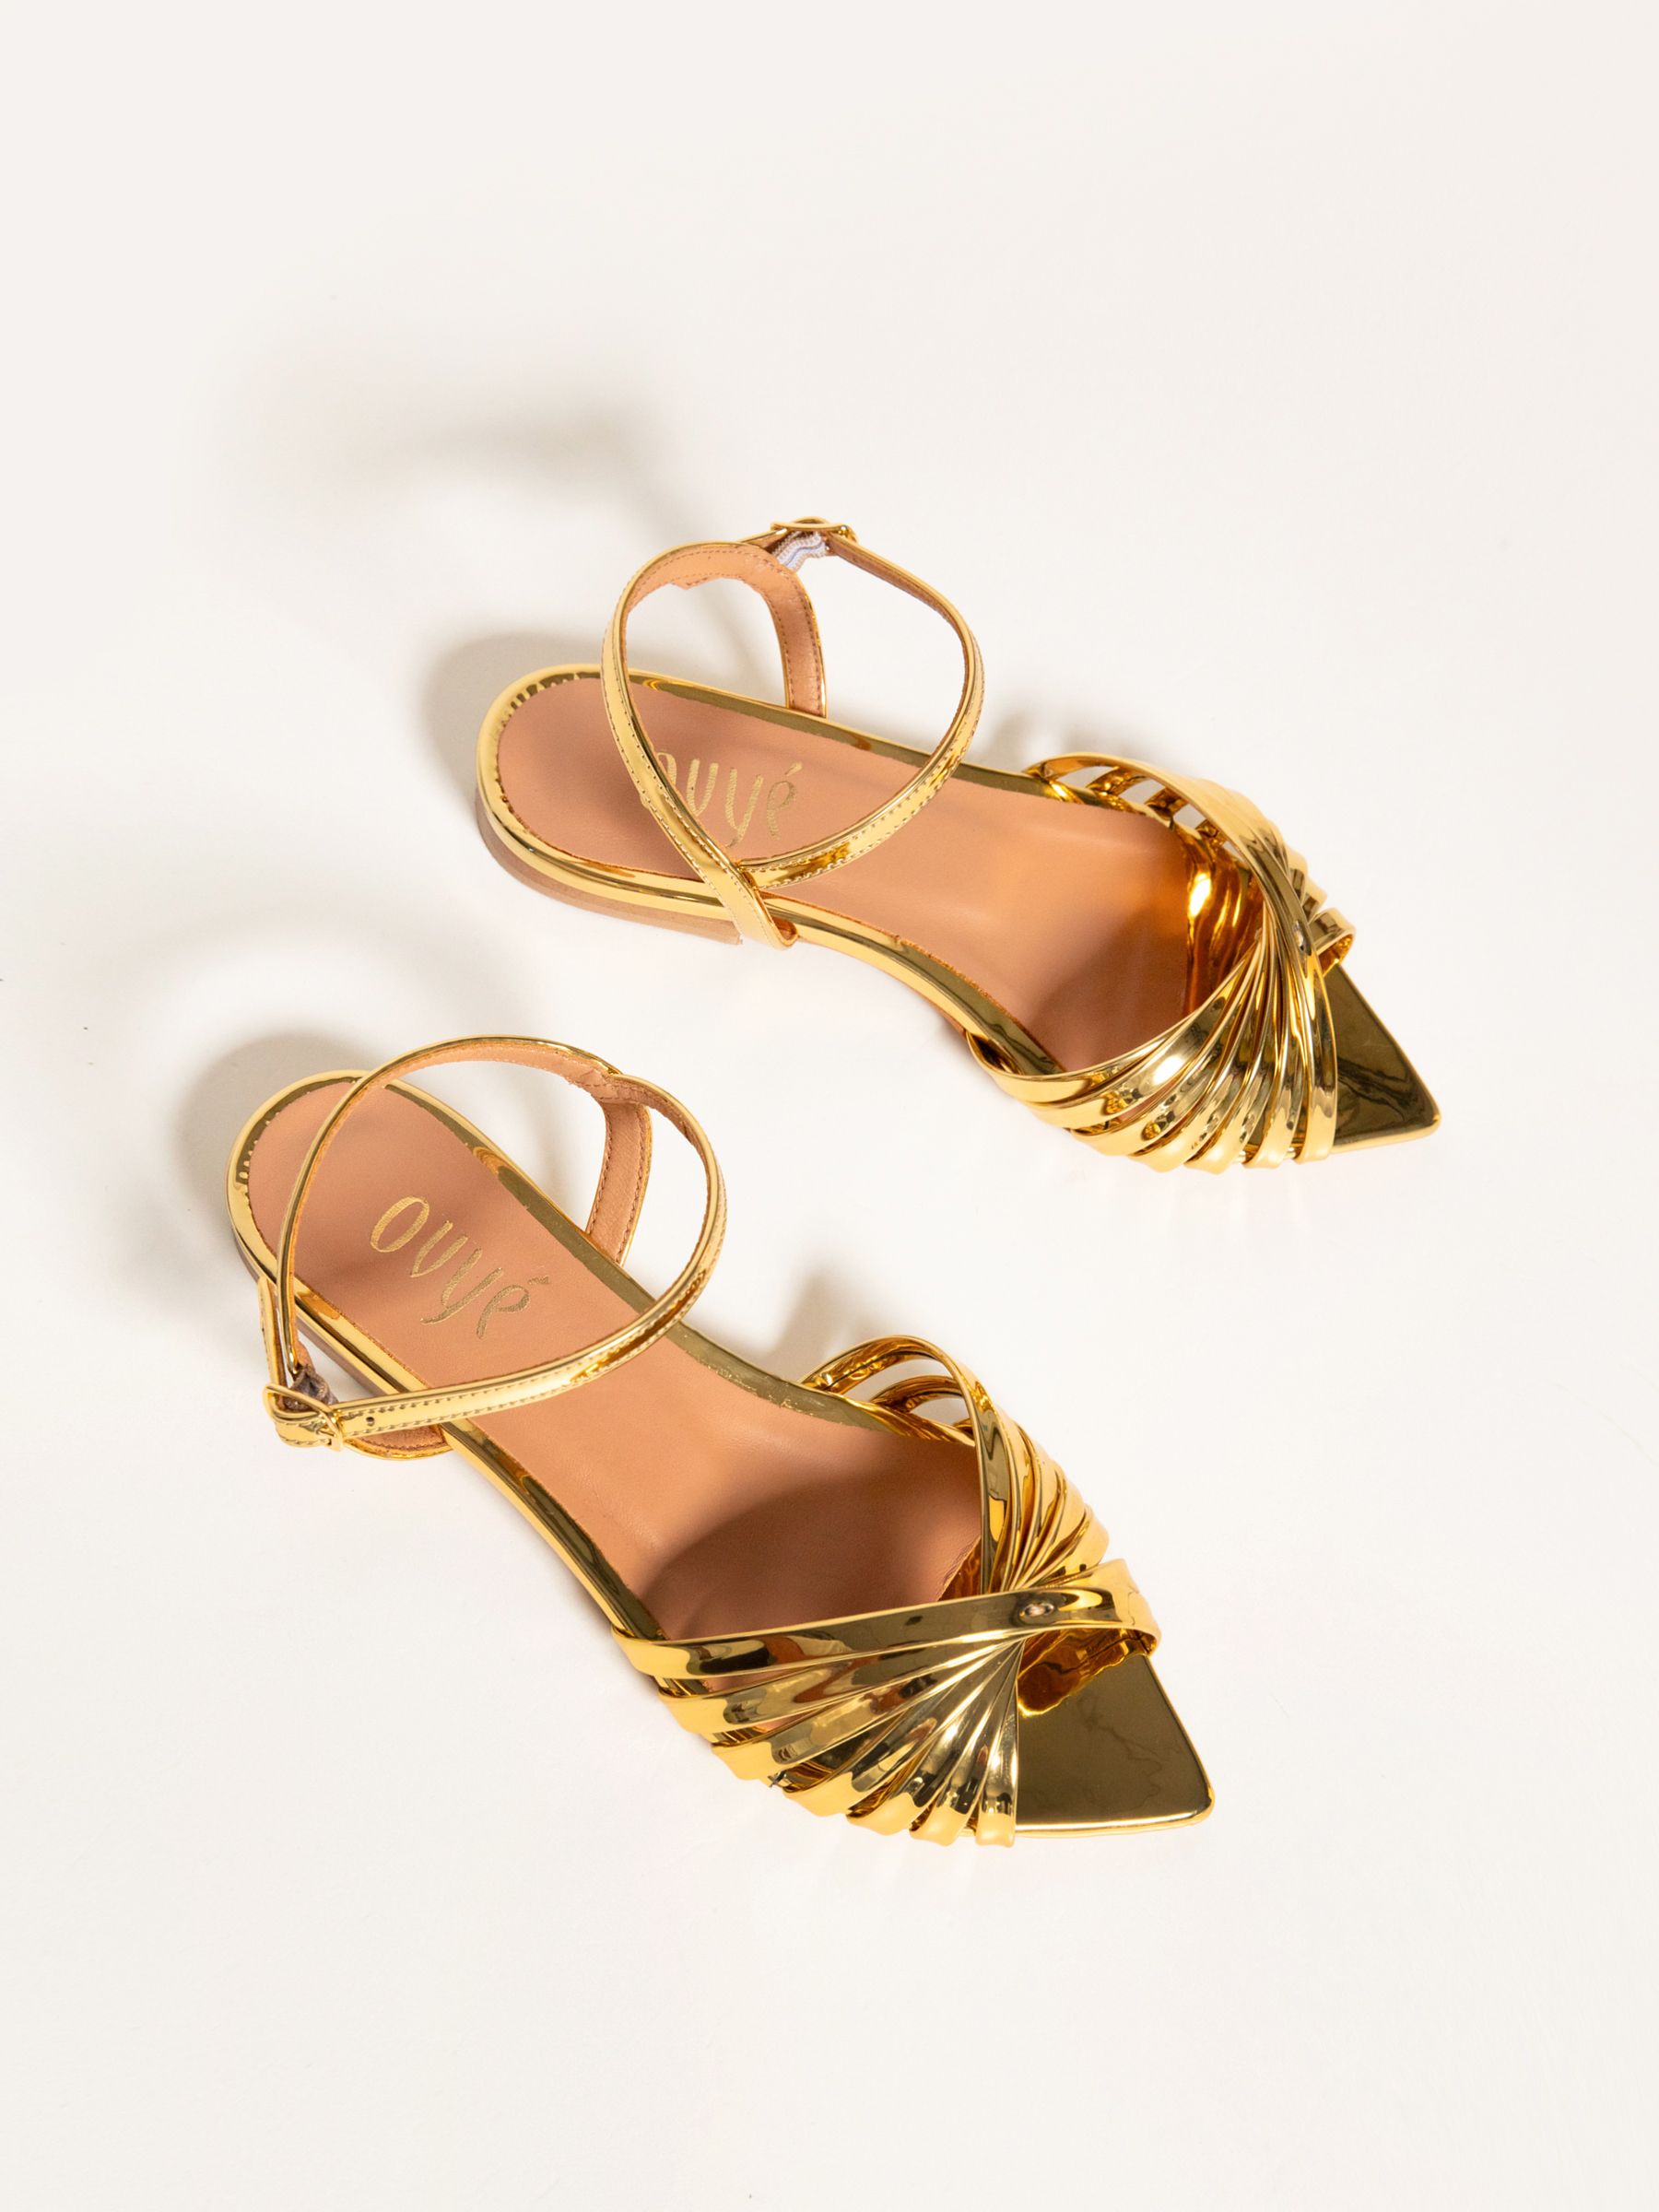 Mirror Sandal Gold Color F0545554-0588 Sconti Online